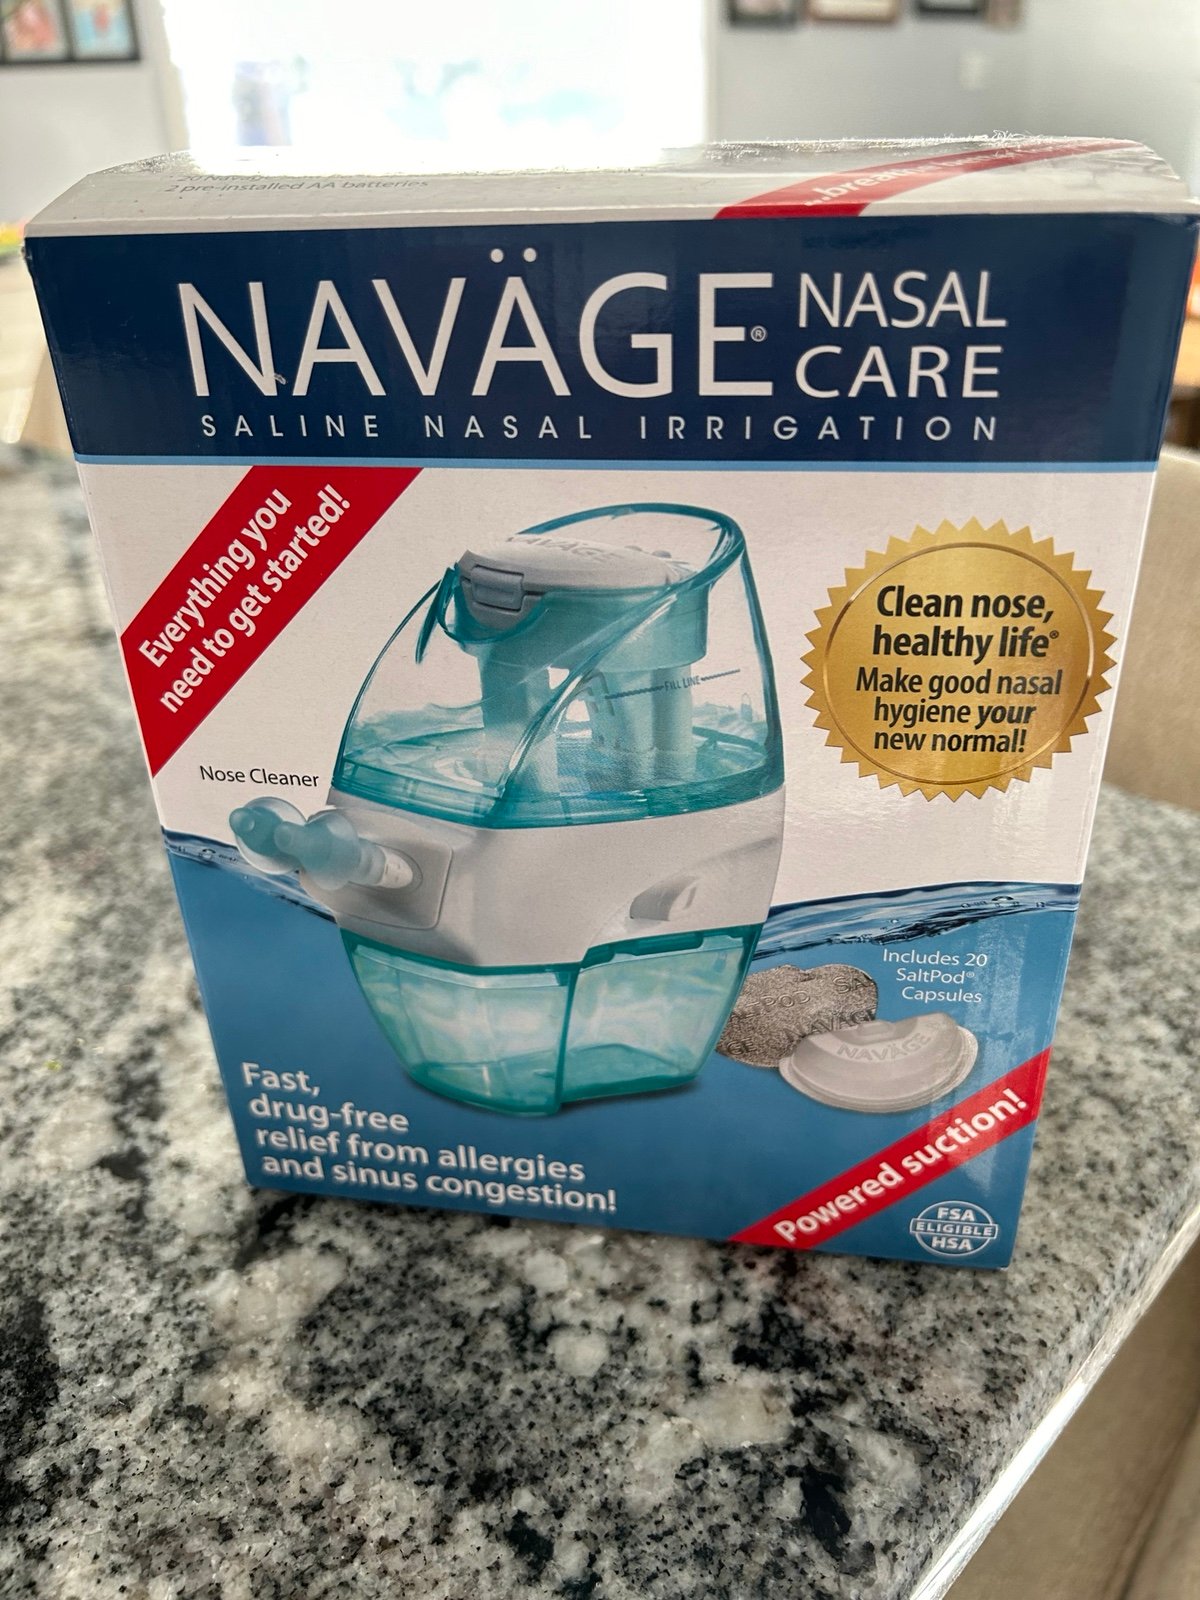 Navage Nasal Care 9hkMc0gU6